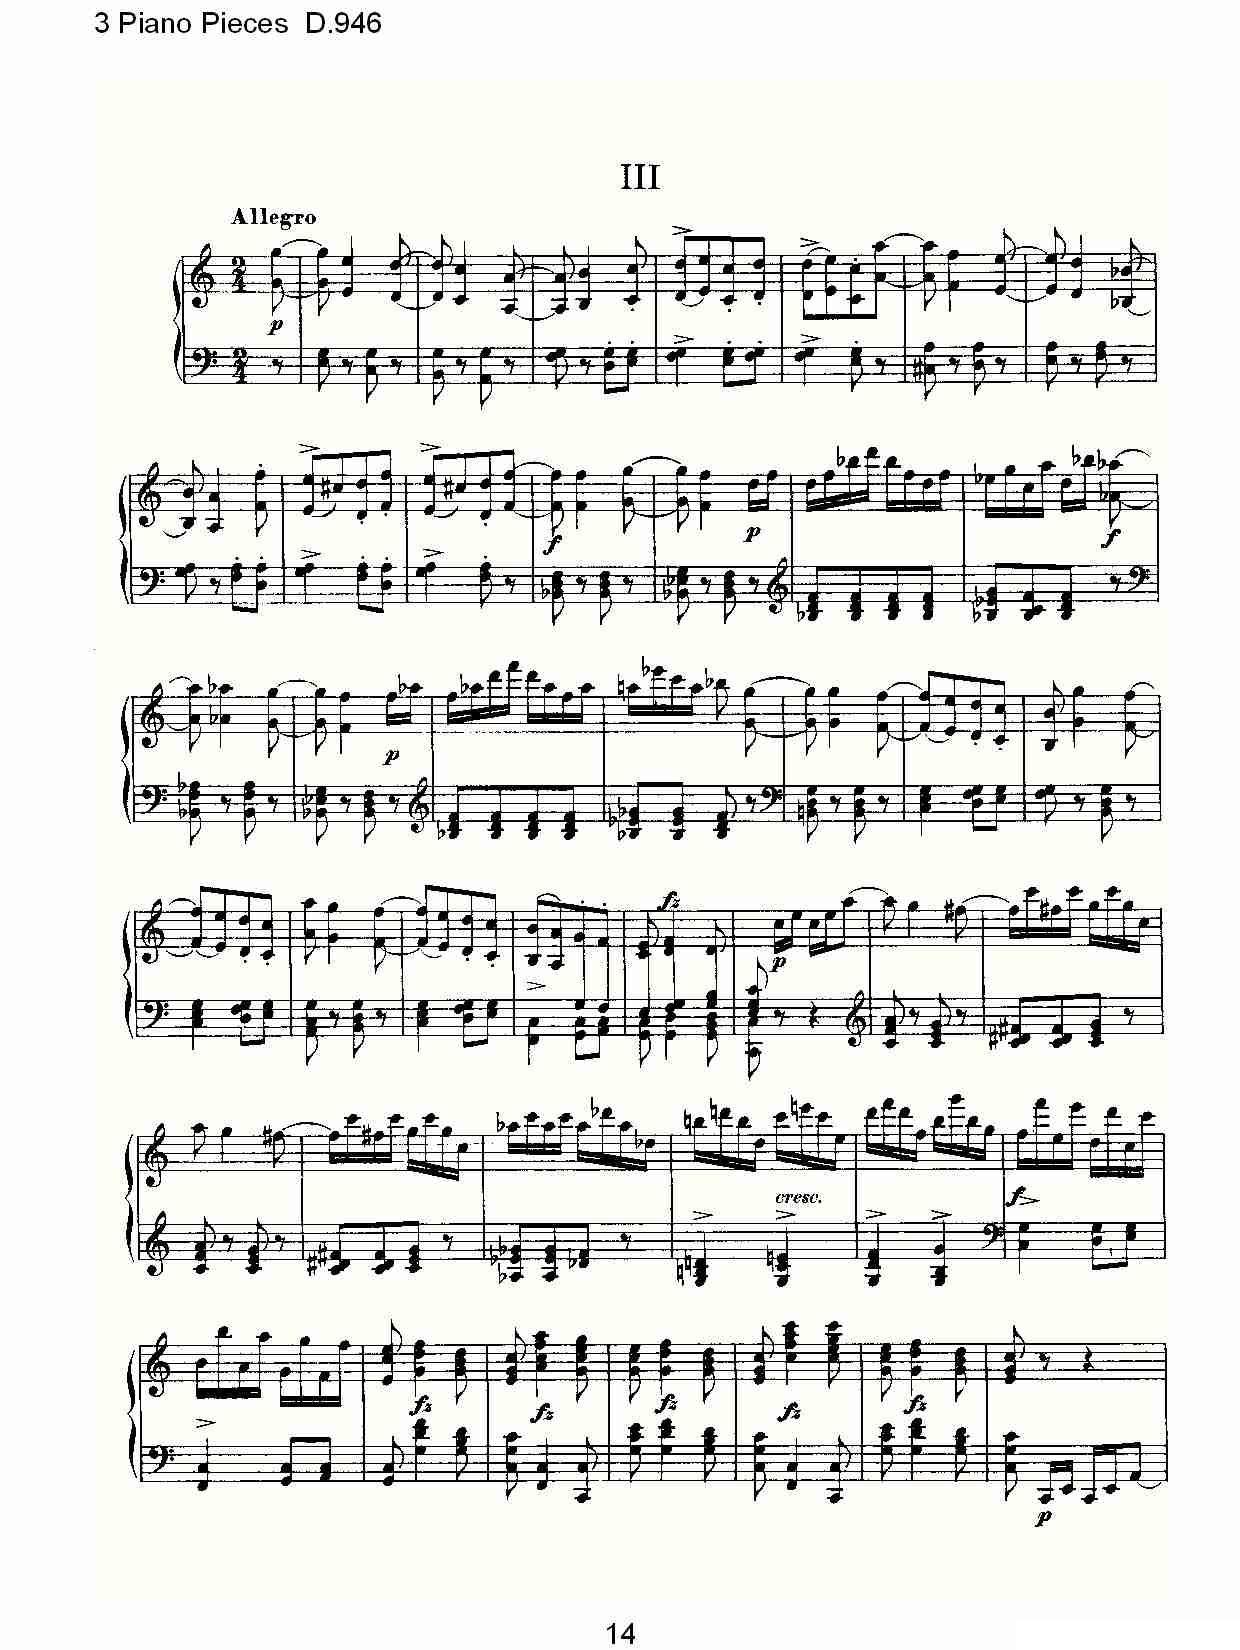 3 Piano Pieces D.946（钢琴三联奏D.946）钢琴曲谱（图14）